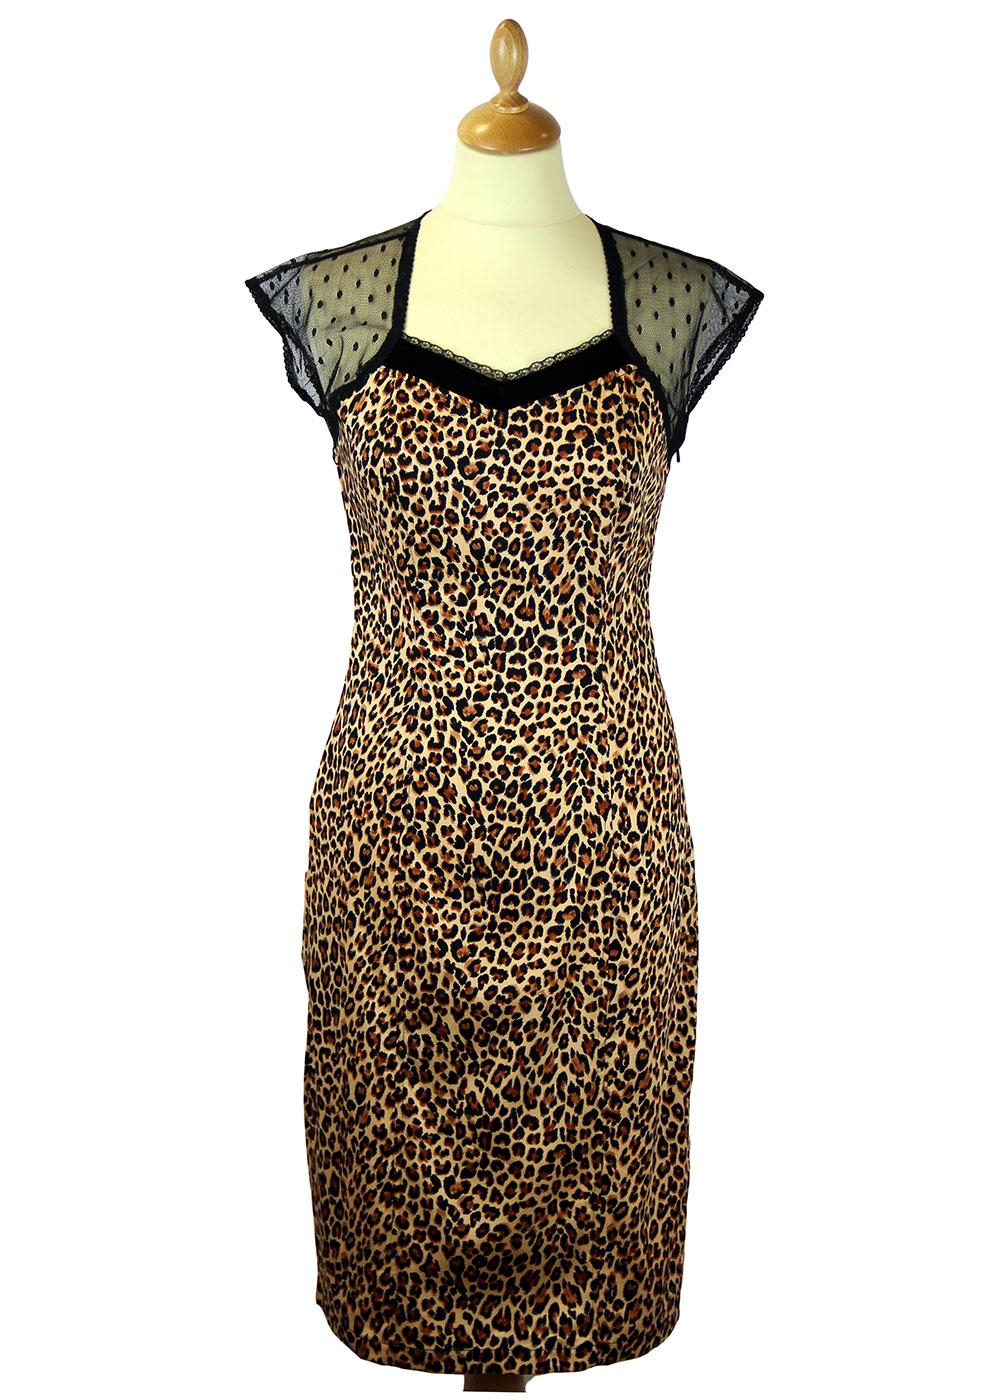 Kitty FRIDAY ON MY MIND Retro Leopard Print Dress